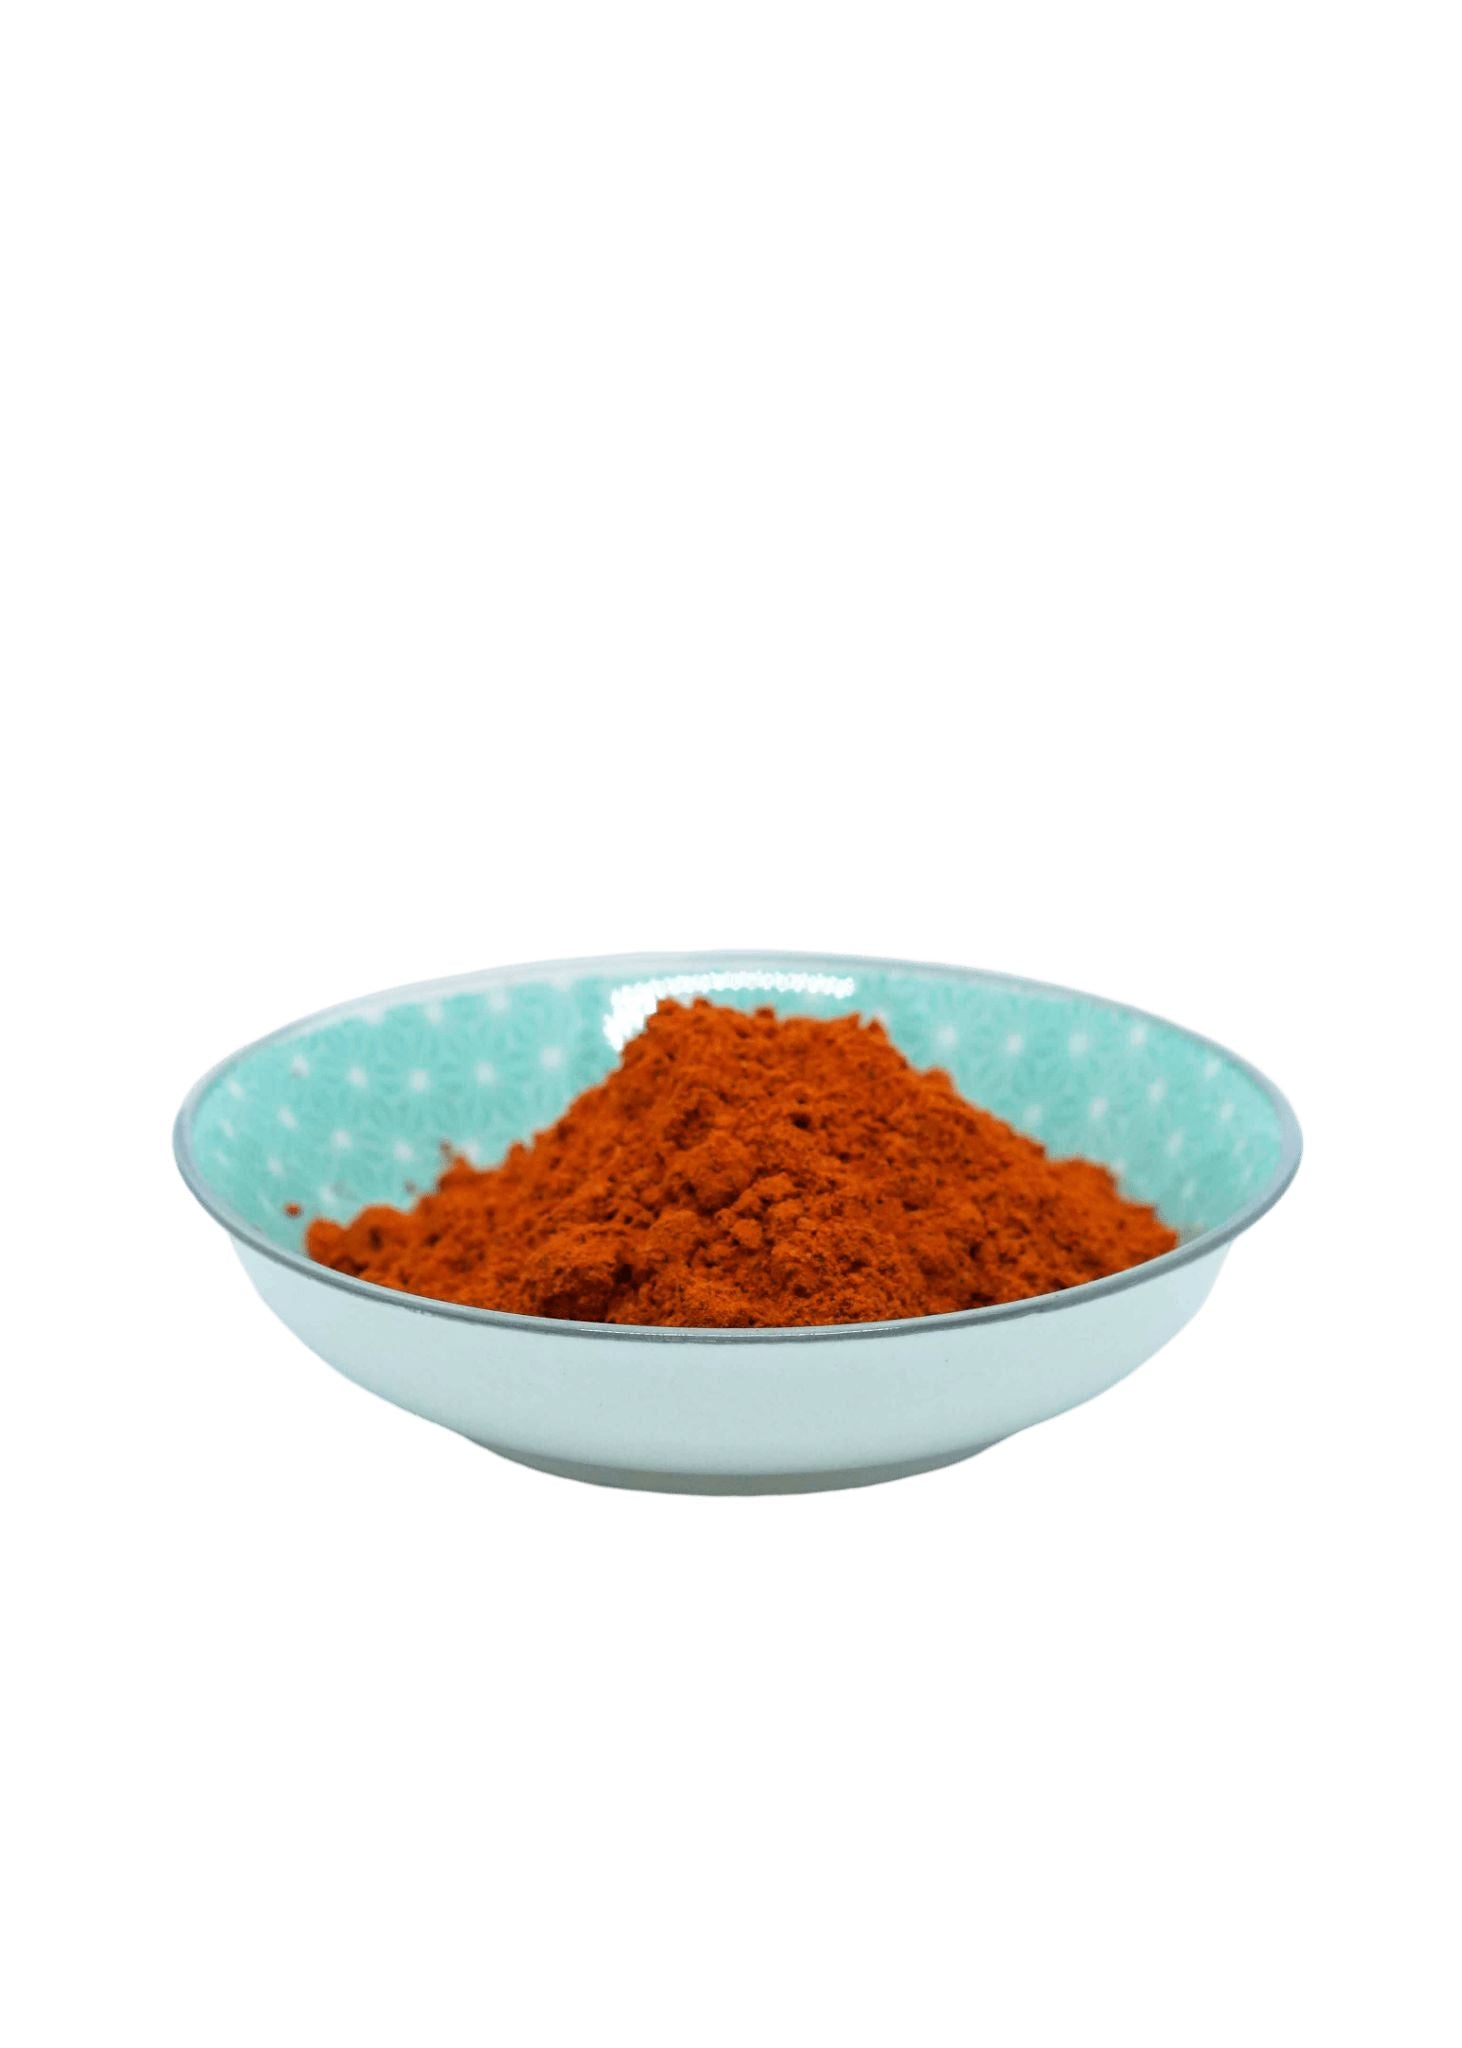 Annato Powder (Achiote) 100g/200g Seasoning Poblano 